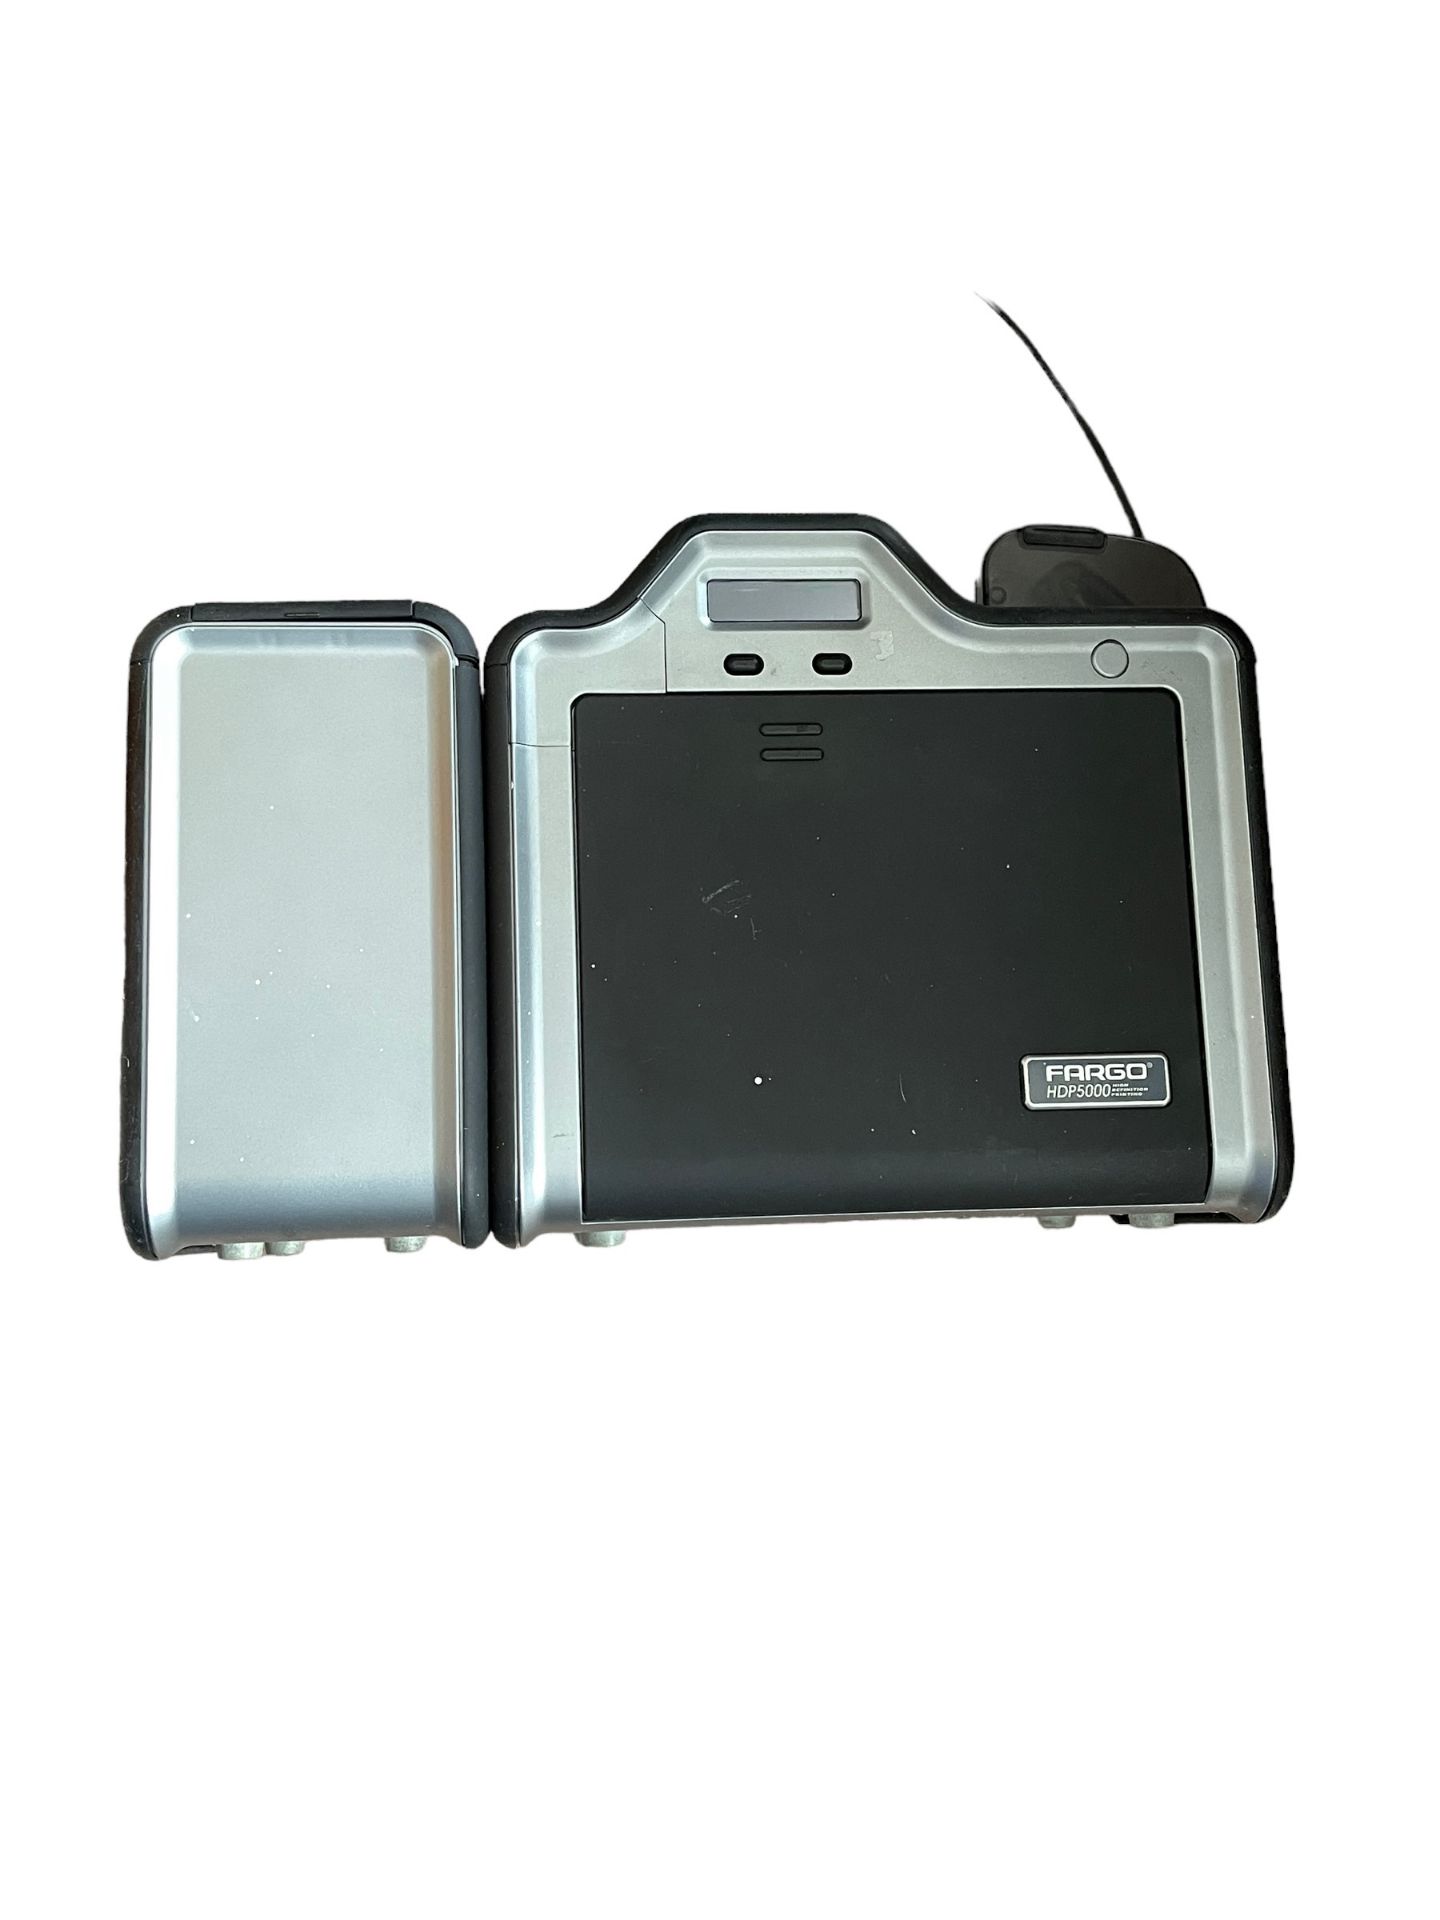 Fargo HPD 5000 ID card printer - Image 3 of 3